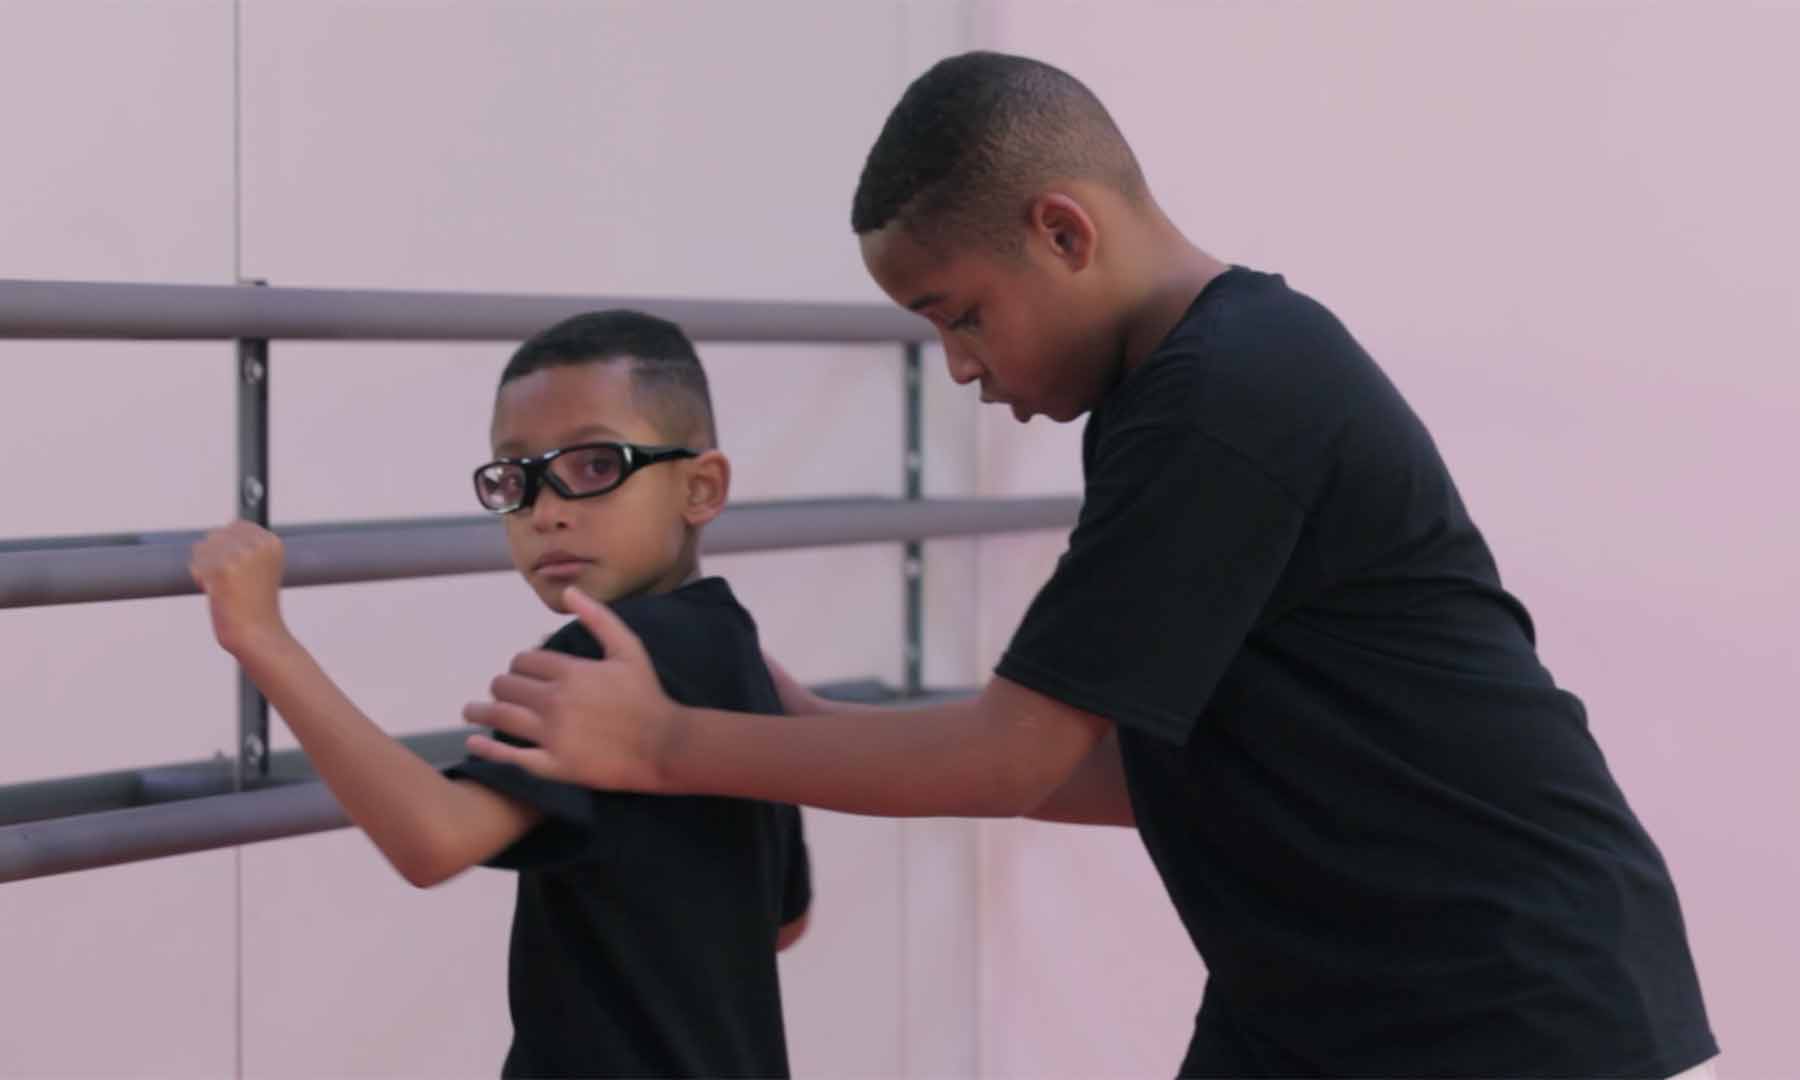 Kids After School Program NYC Karate City